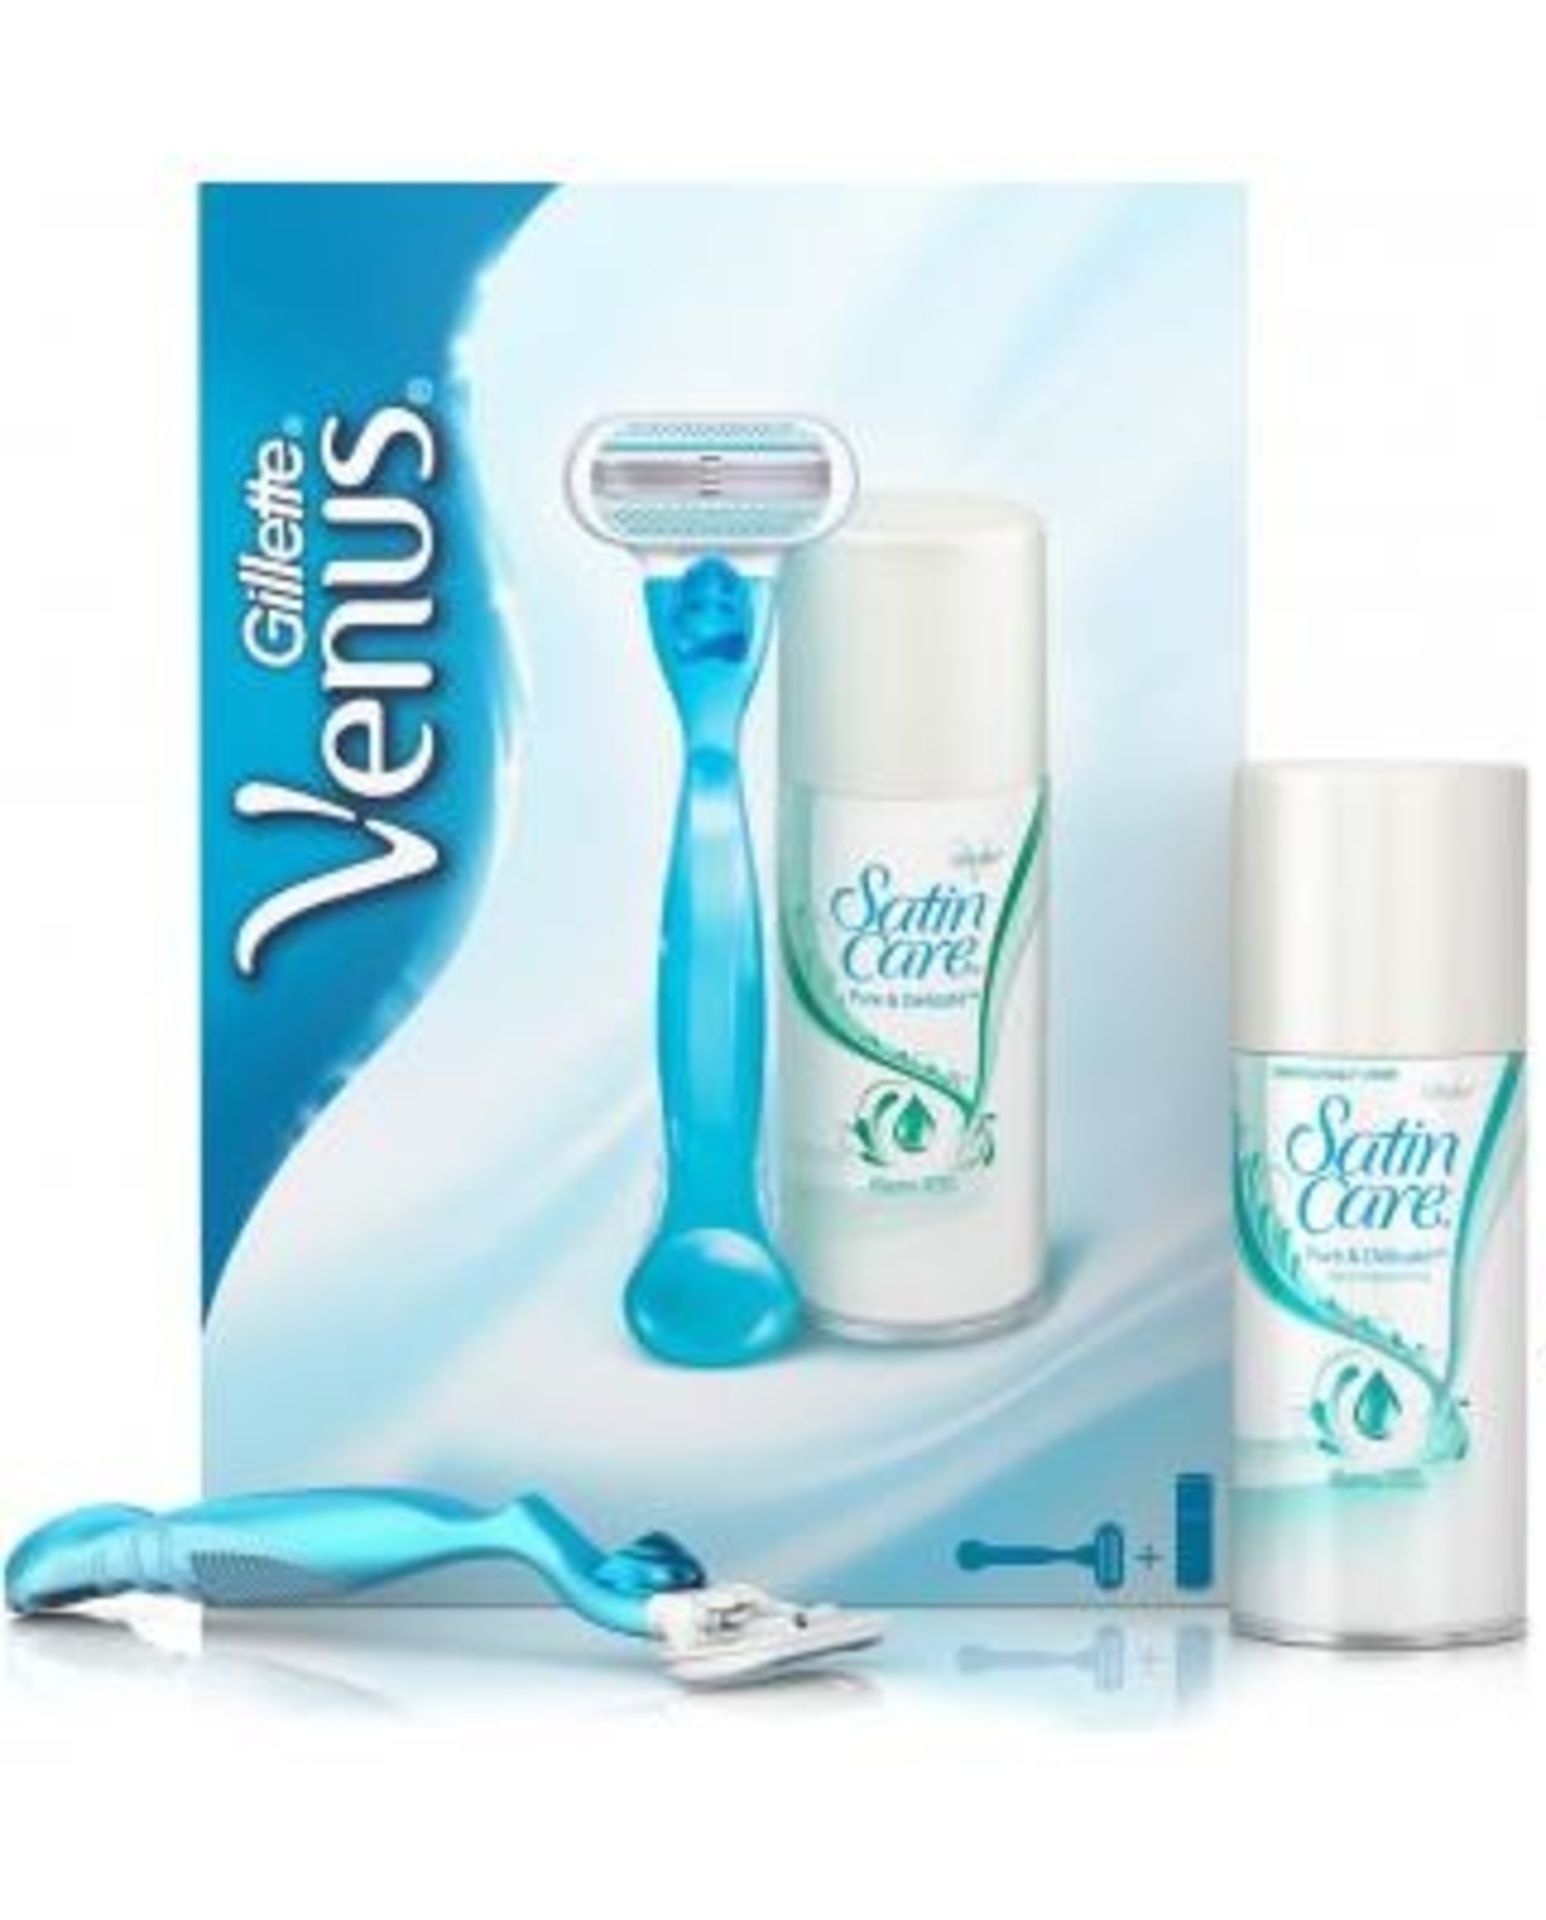 V Brand New Gillette Venus Satin Care Pure & Delicate Set With Razor And Shave Gel